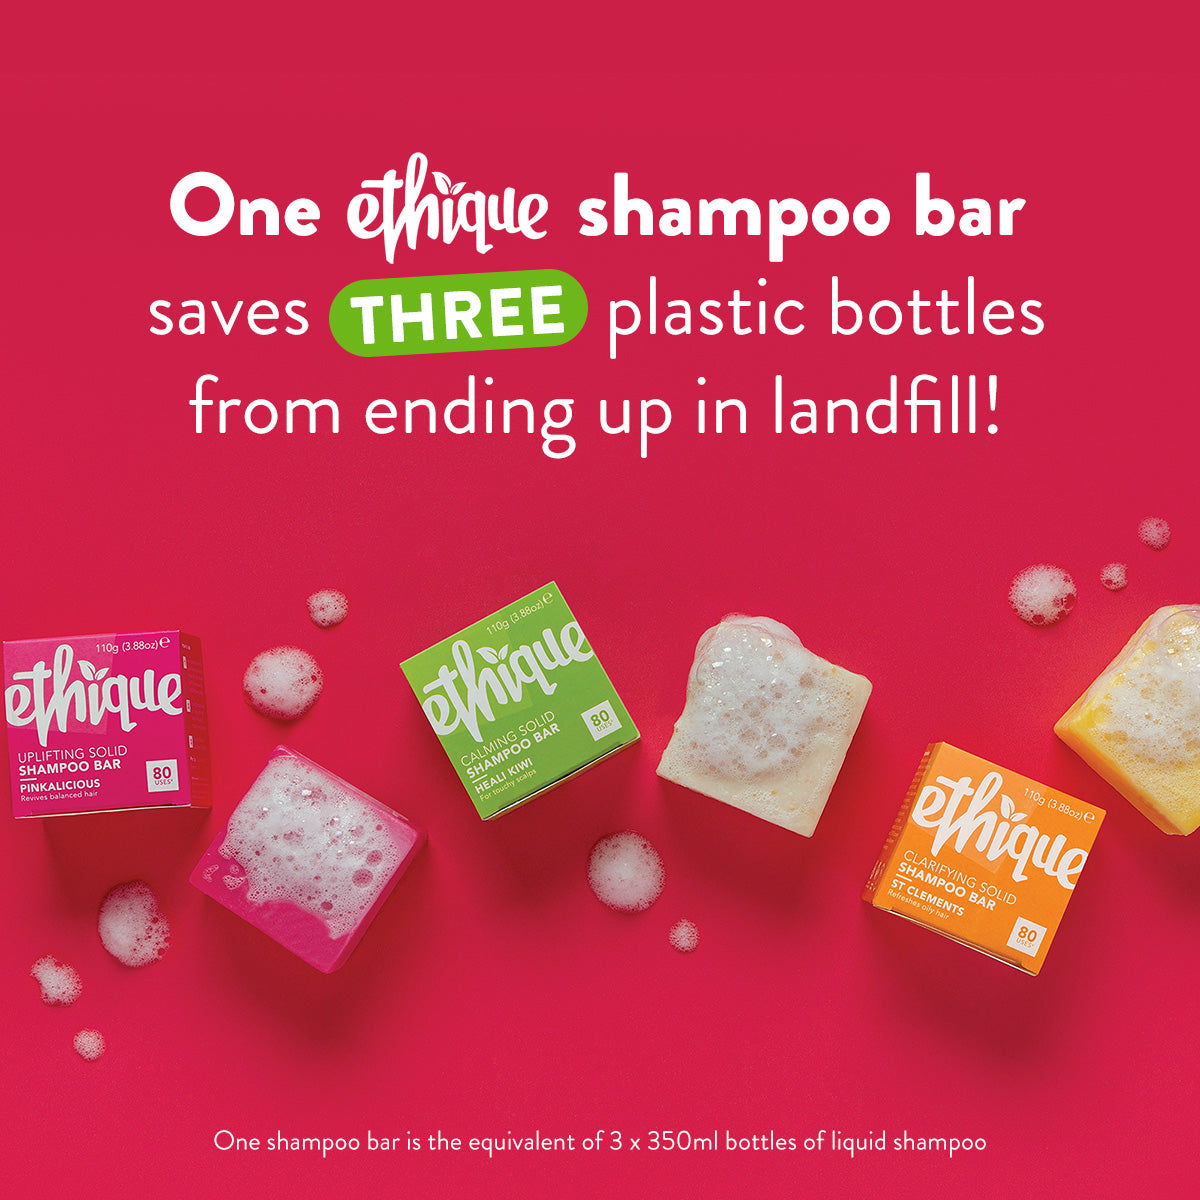 Restoring Shampoo Bar for Dry, Damaged Hair: Sorbet™